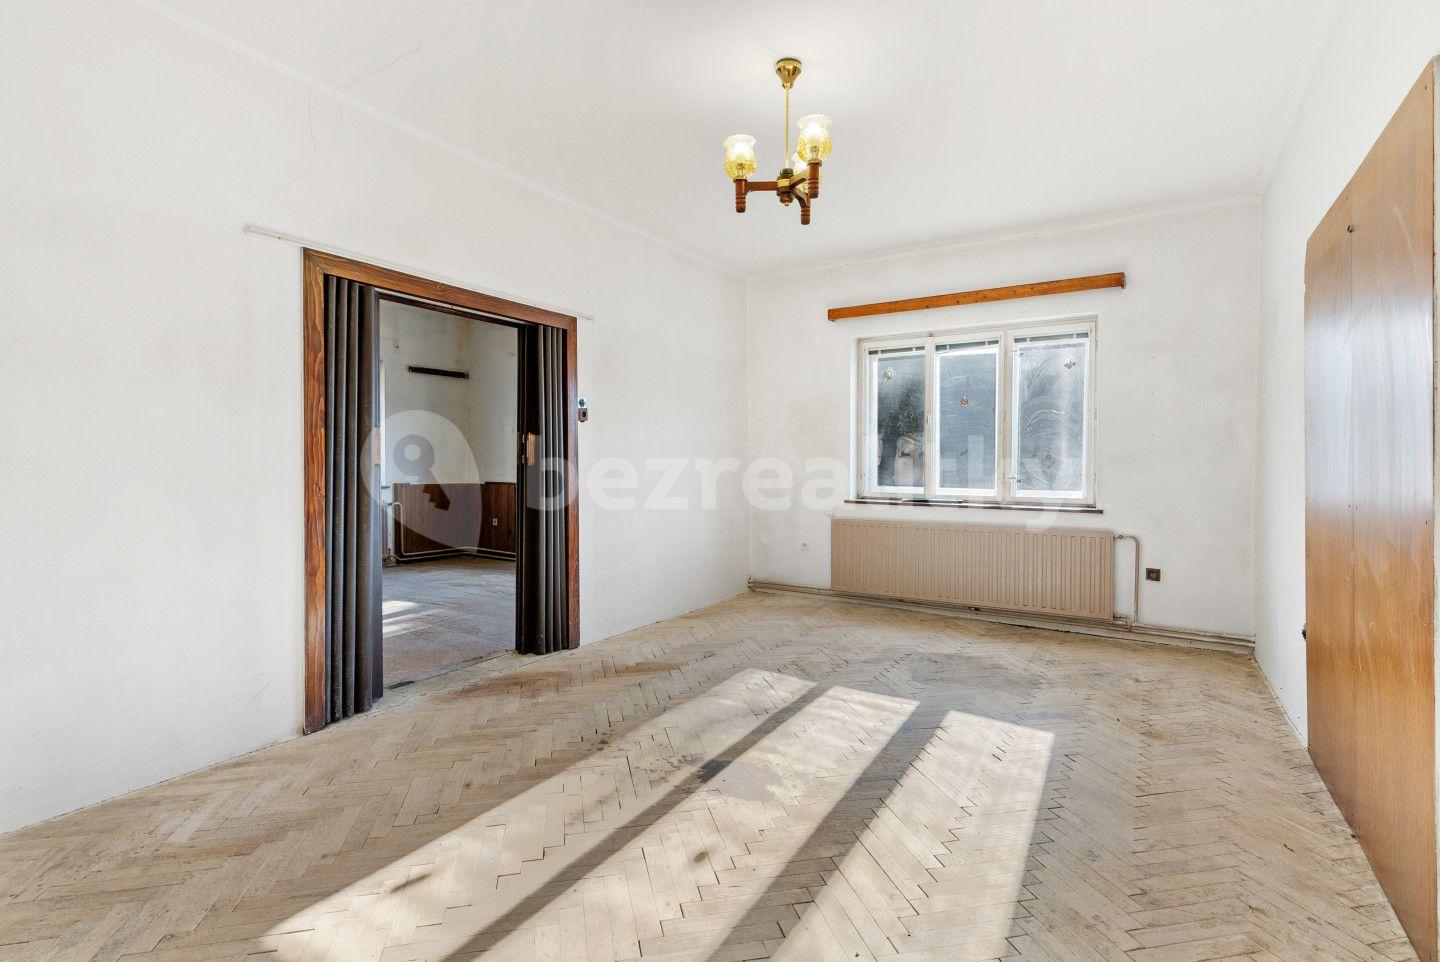 Prodej domu 399 m², pozemek 275 m², Janov nad Nisou, Liberecký kraj